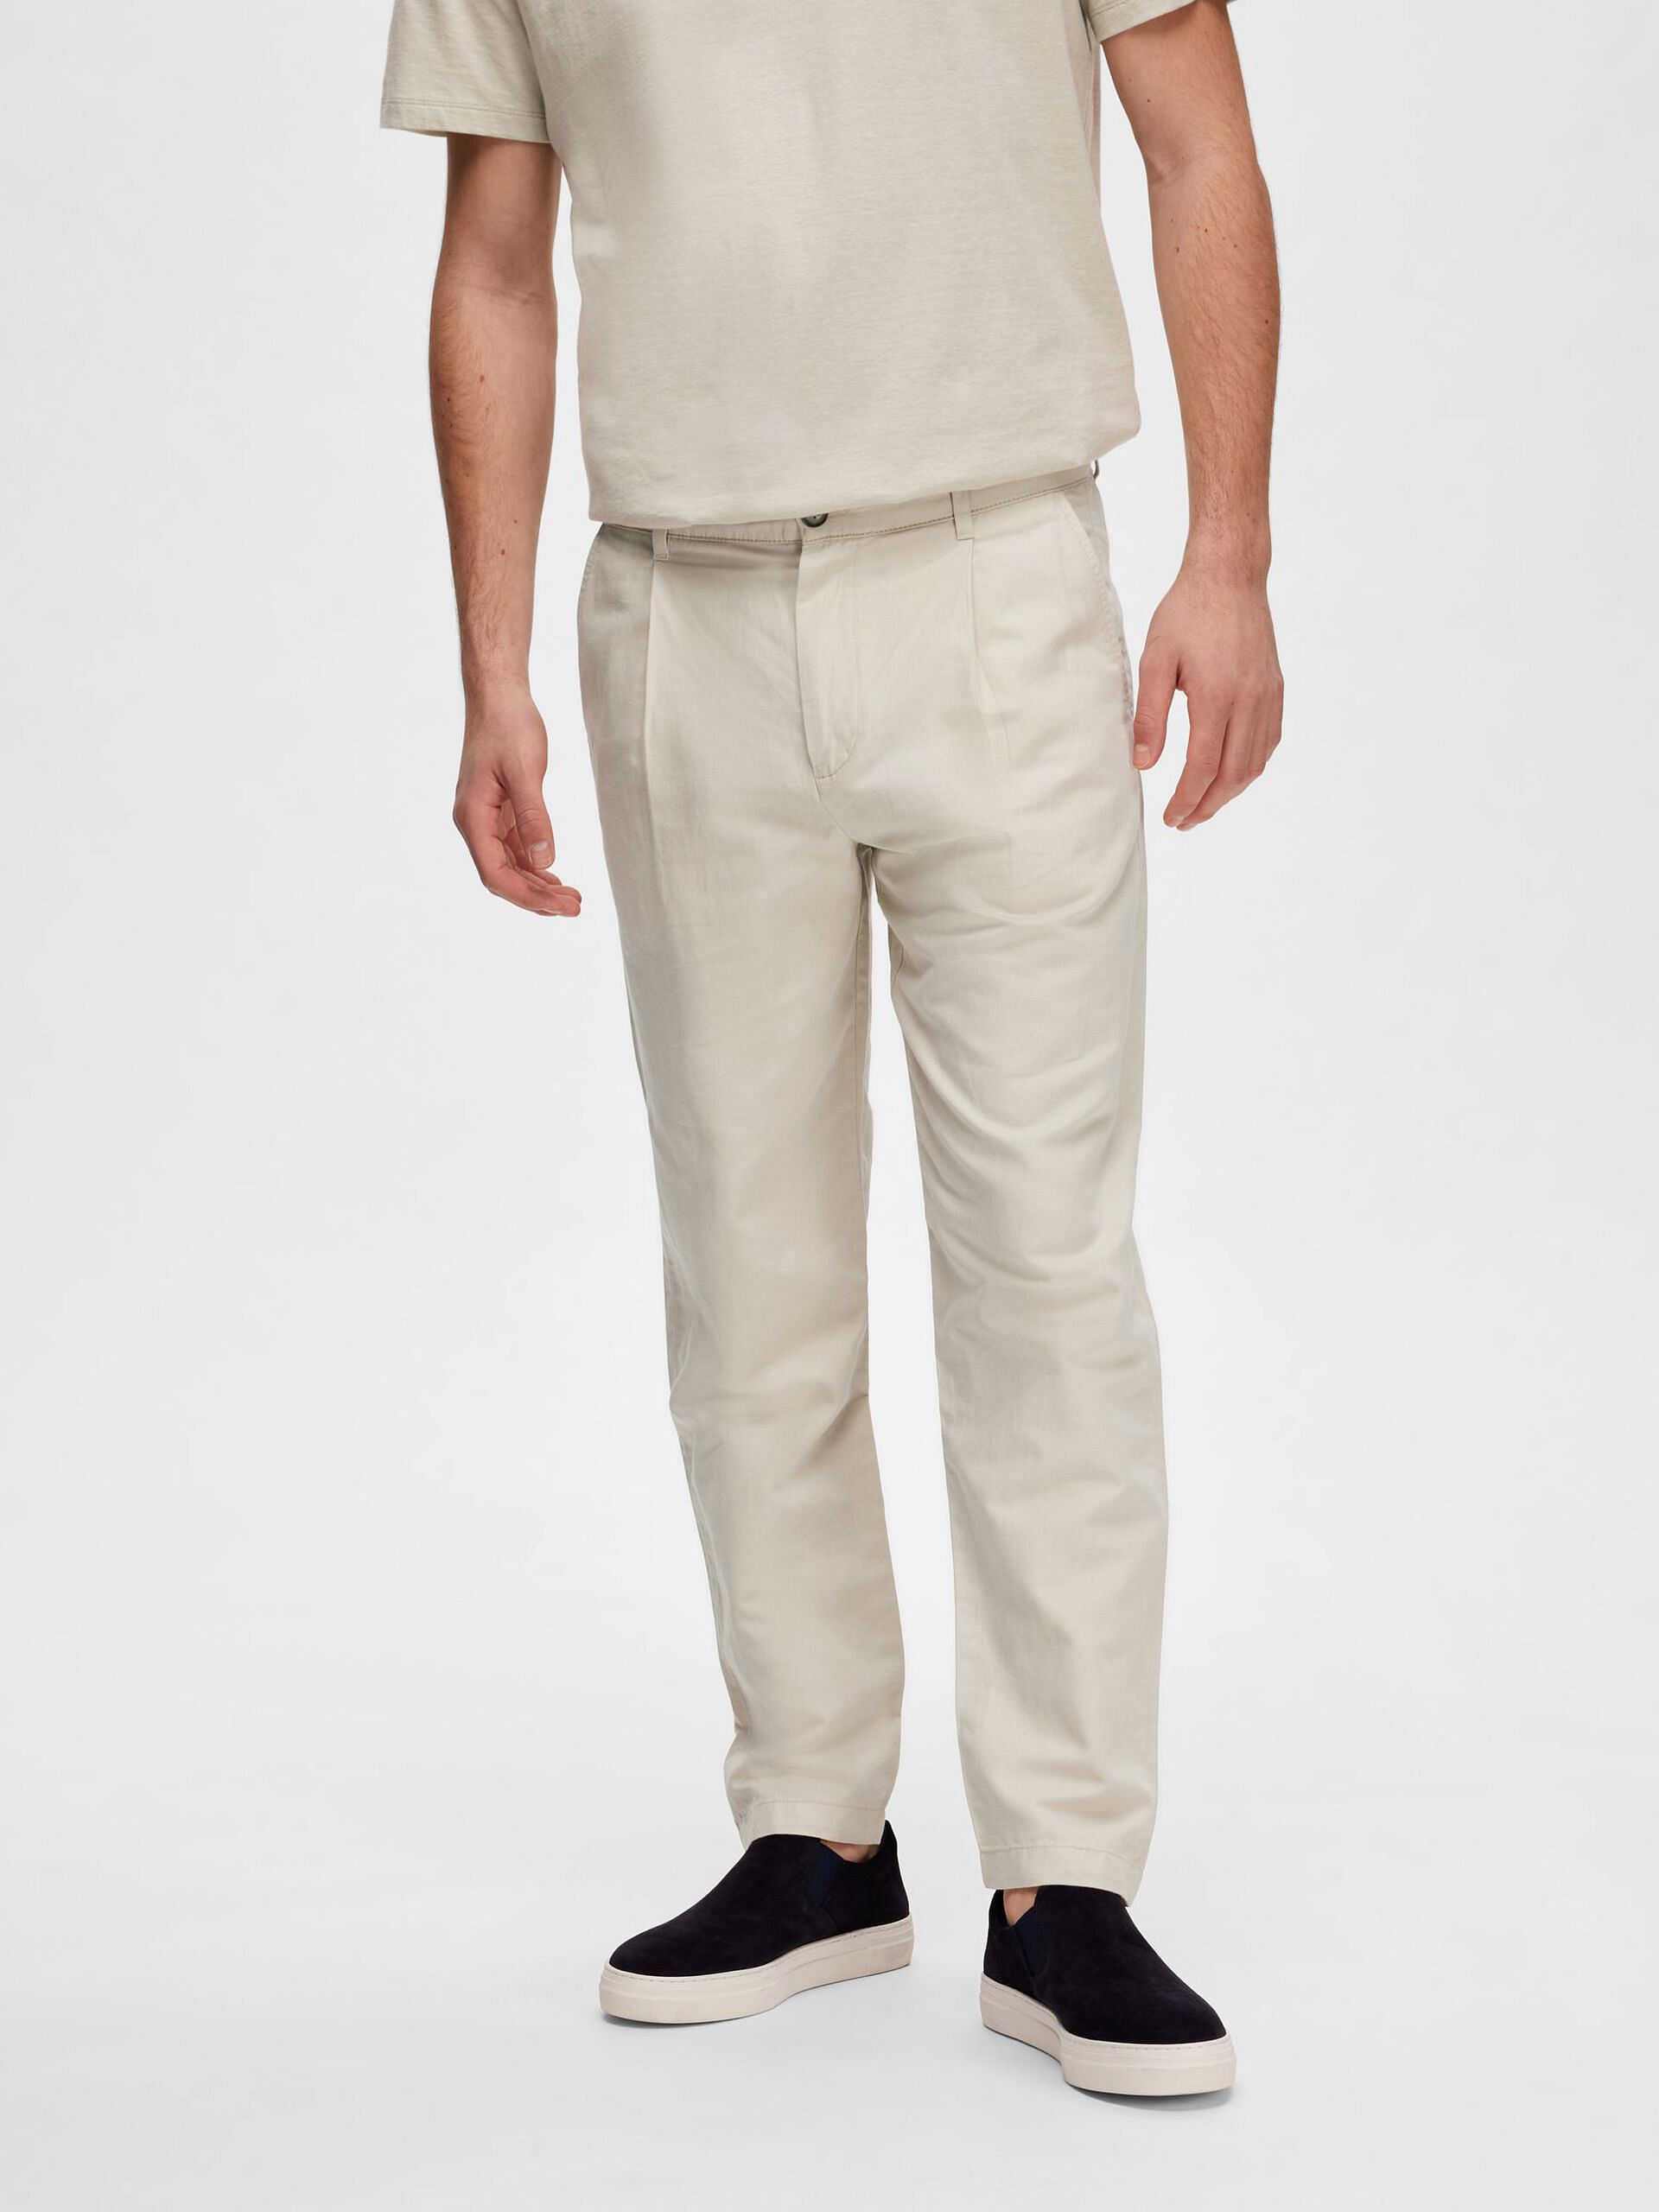 CAICJ98 Gifts For Men Men's Drawstring Linen Pants Casual Summer Beach  Loose Trousers Red,XL - Walmart.com